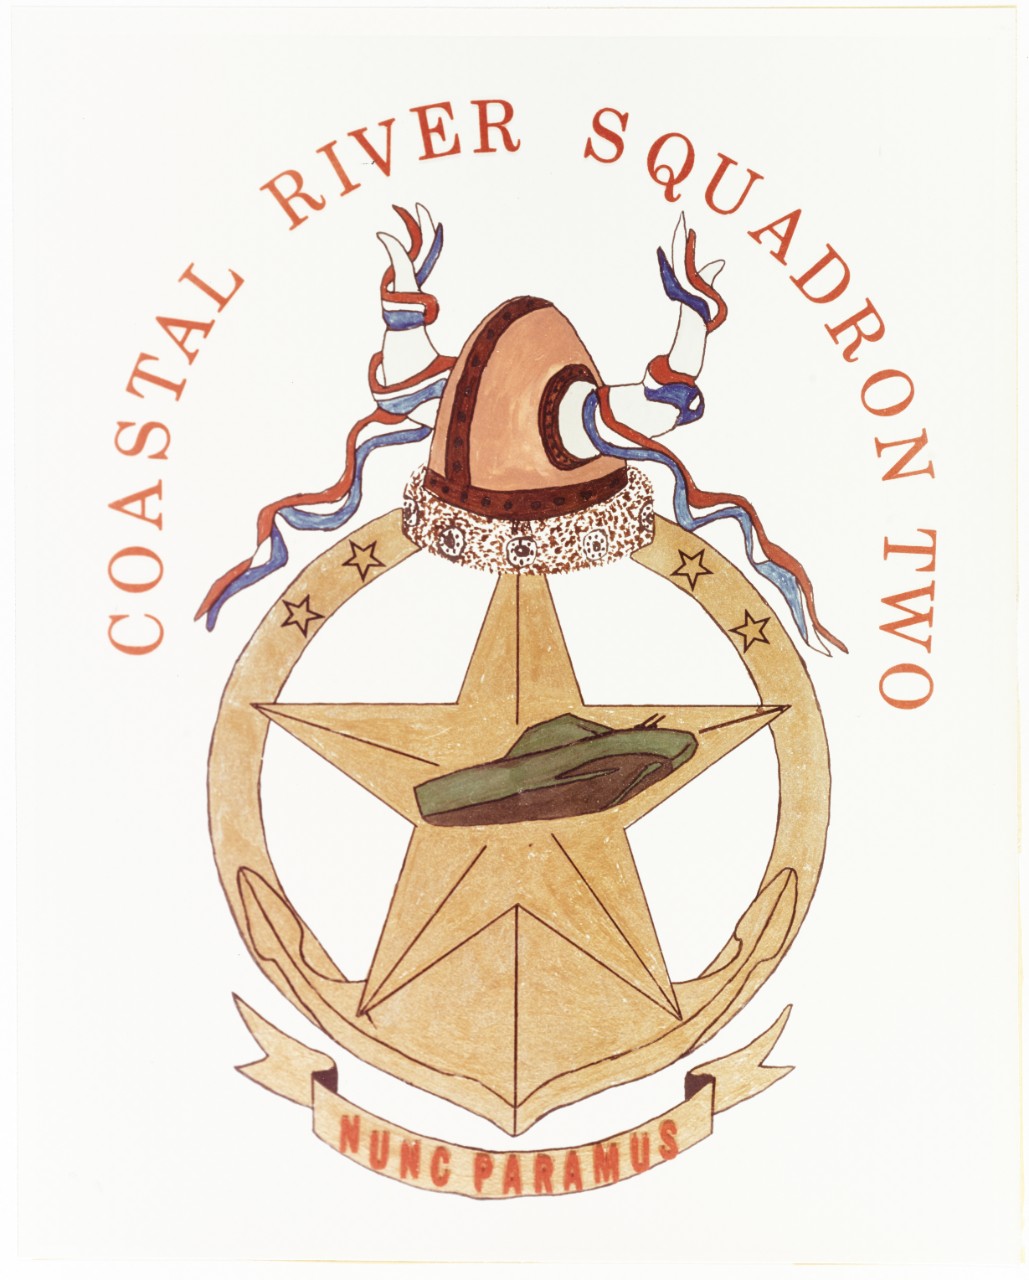 Insignia for the Coastal River Squadron Two